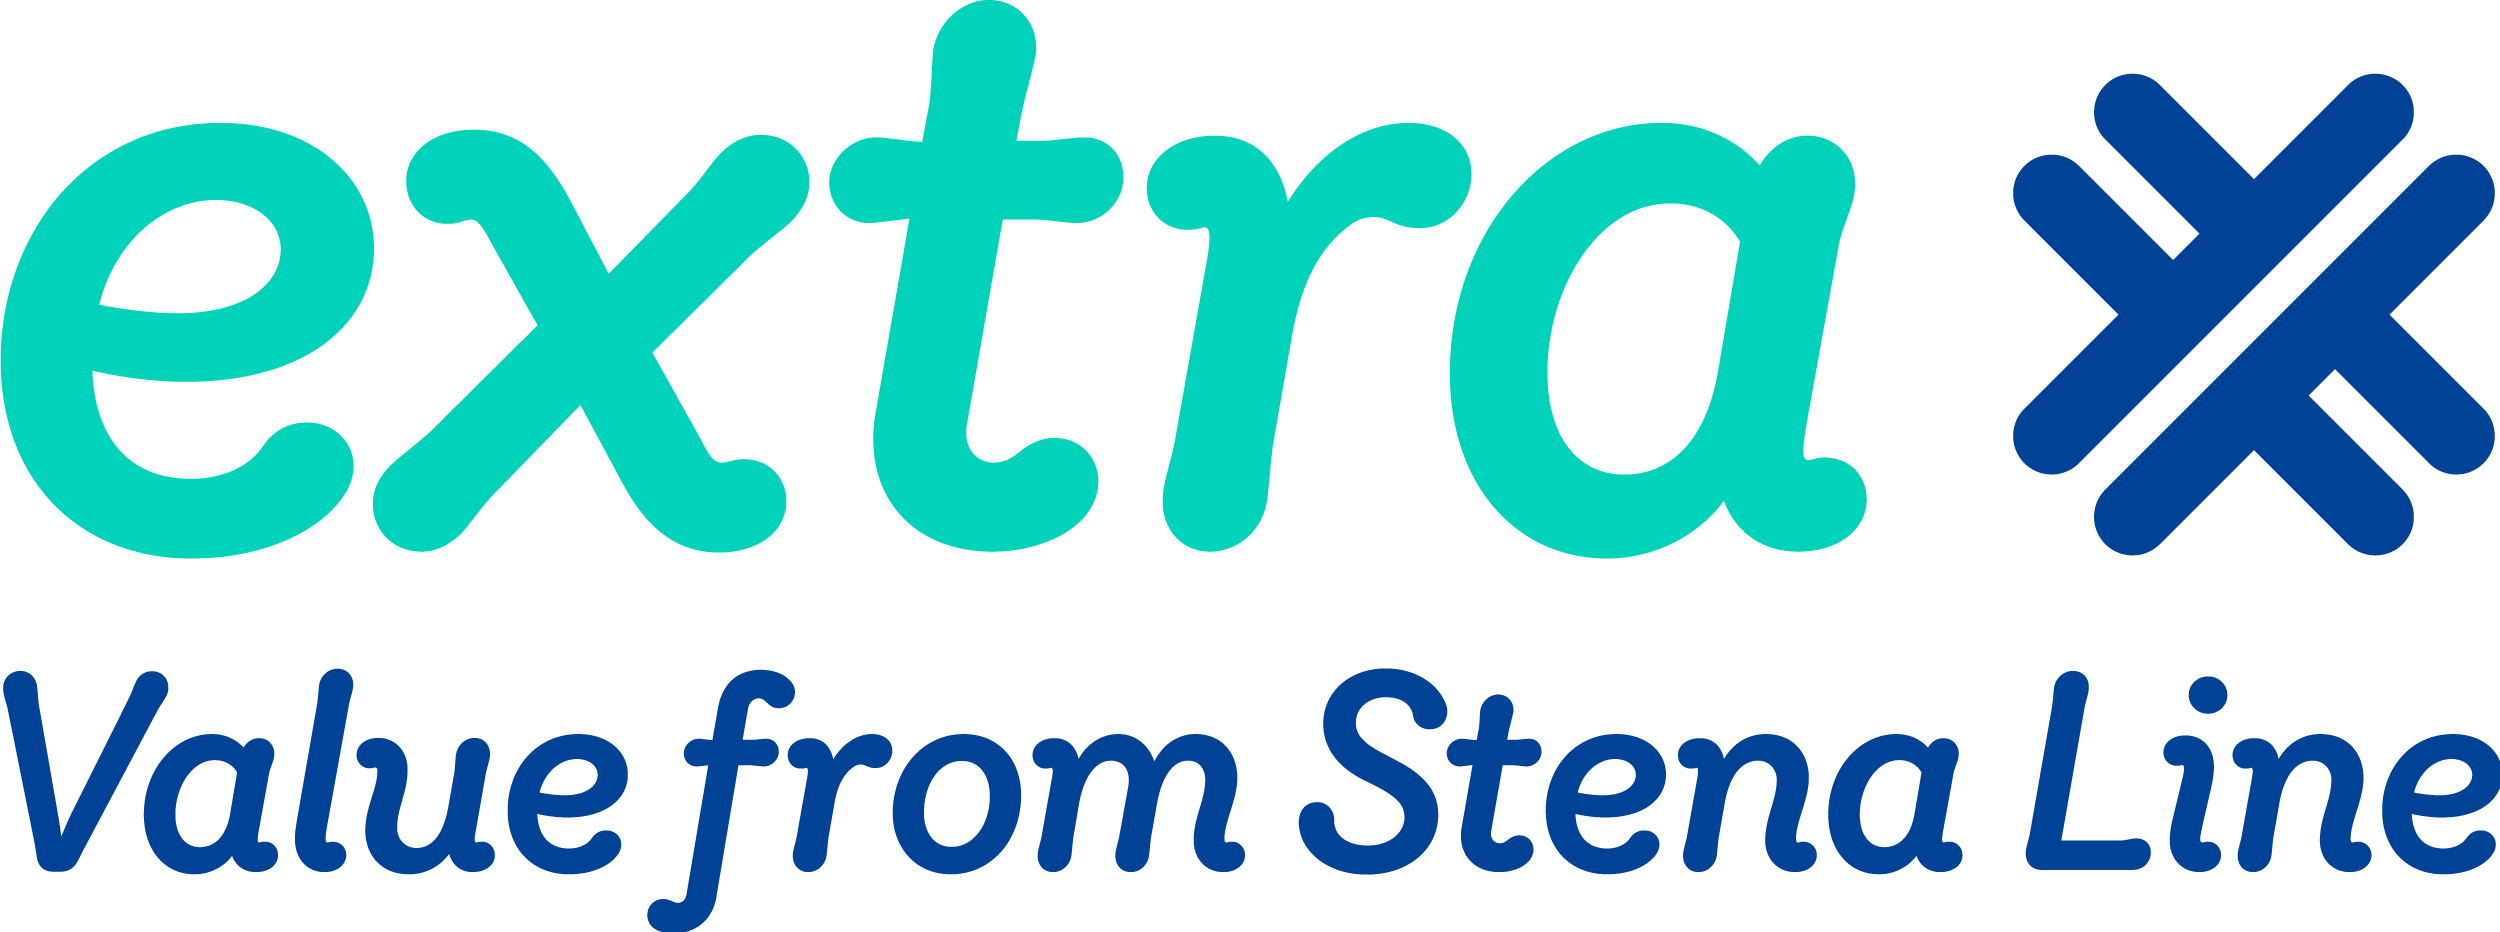 Stena Linen ”Extra”-nimisen jäsenklubin logo.